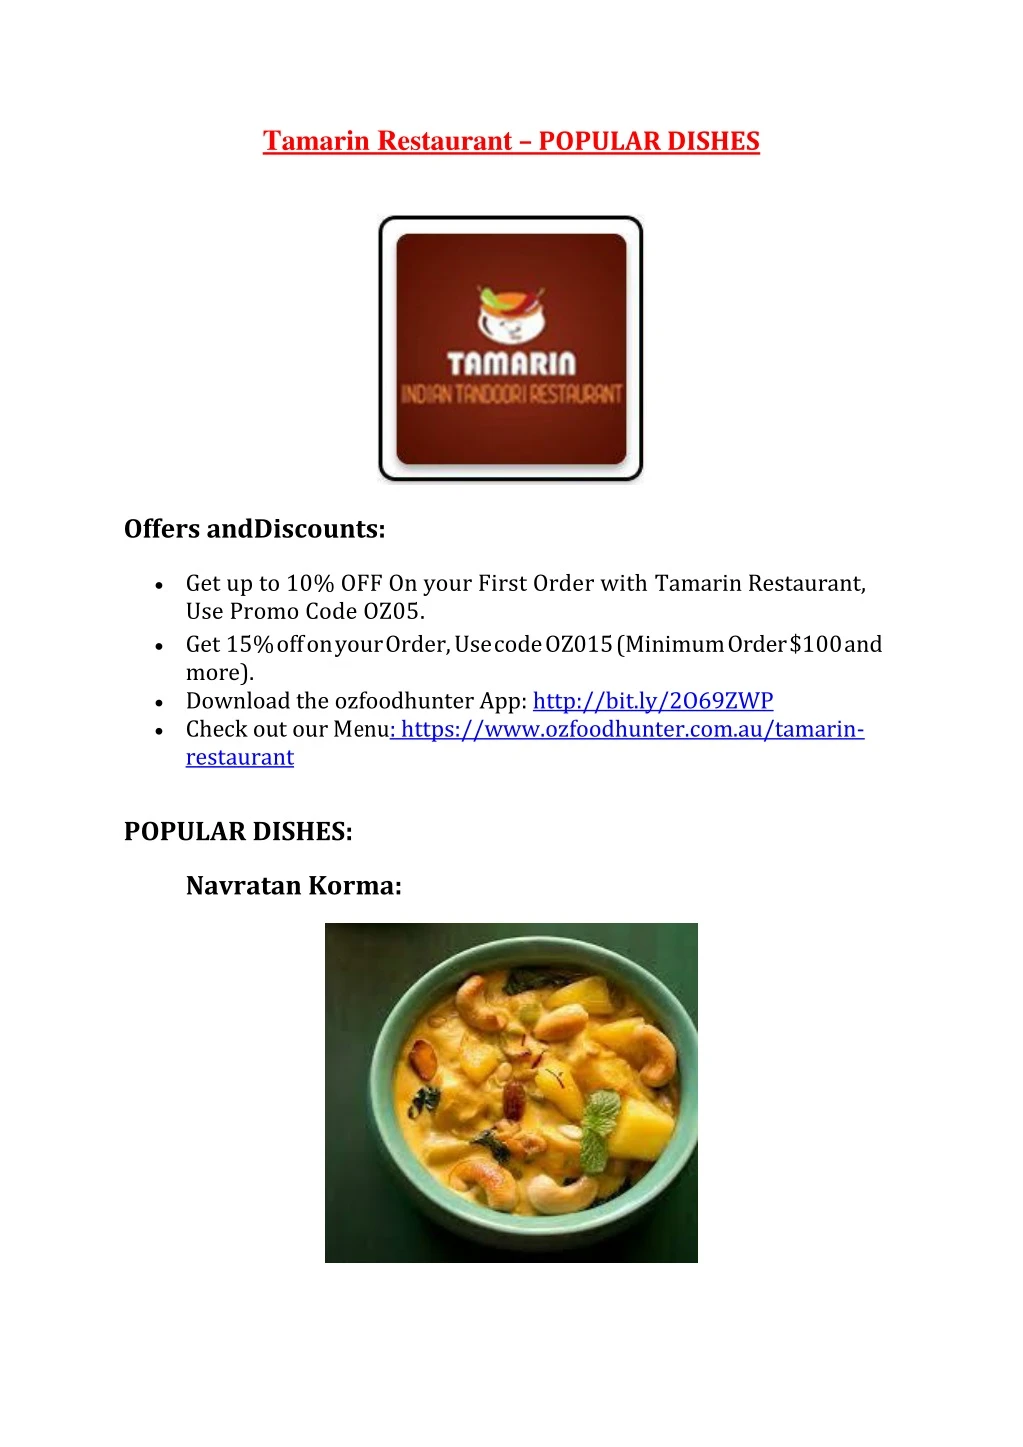 tamarin restaurant popular dishes